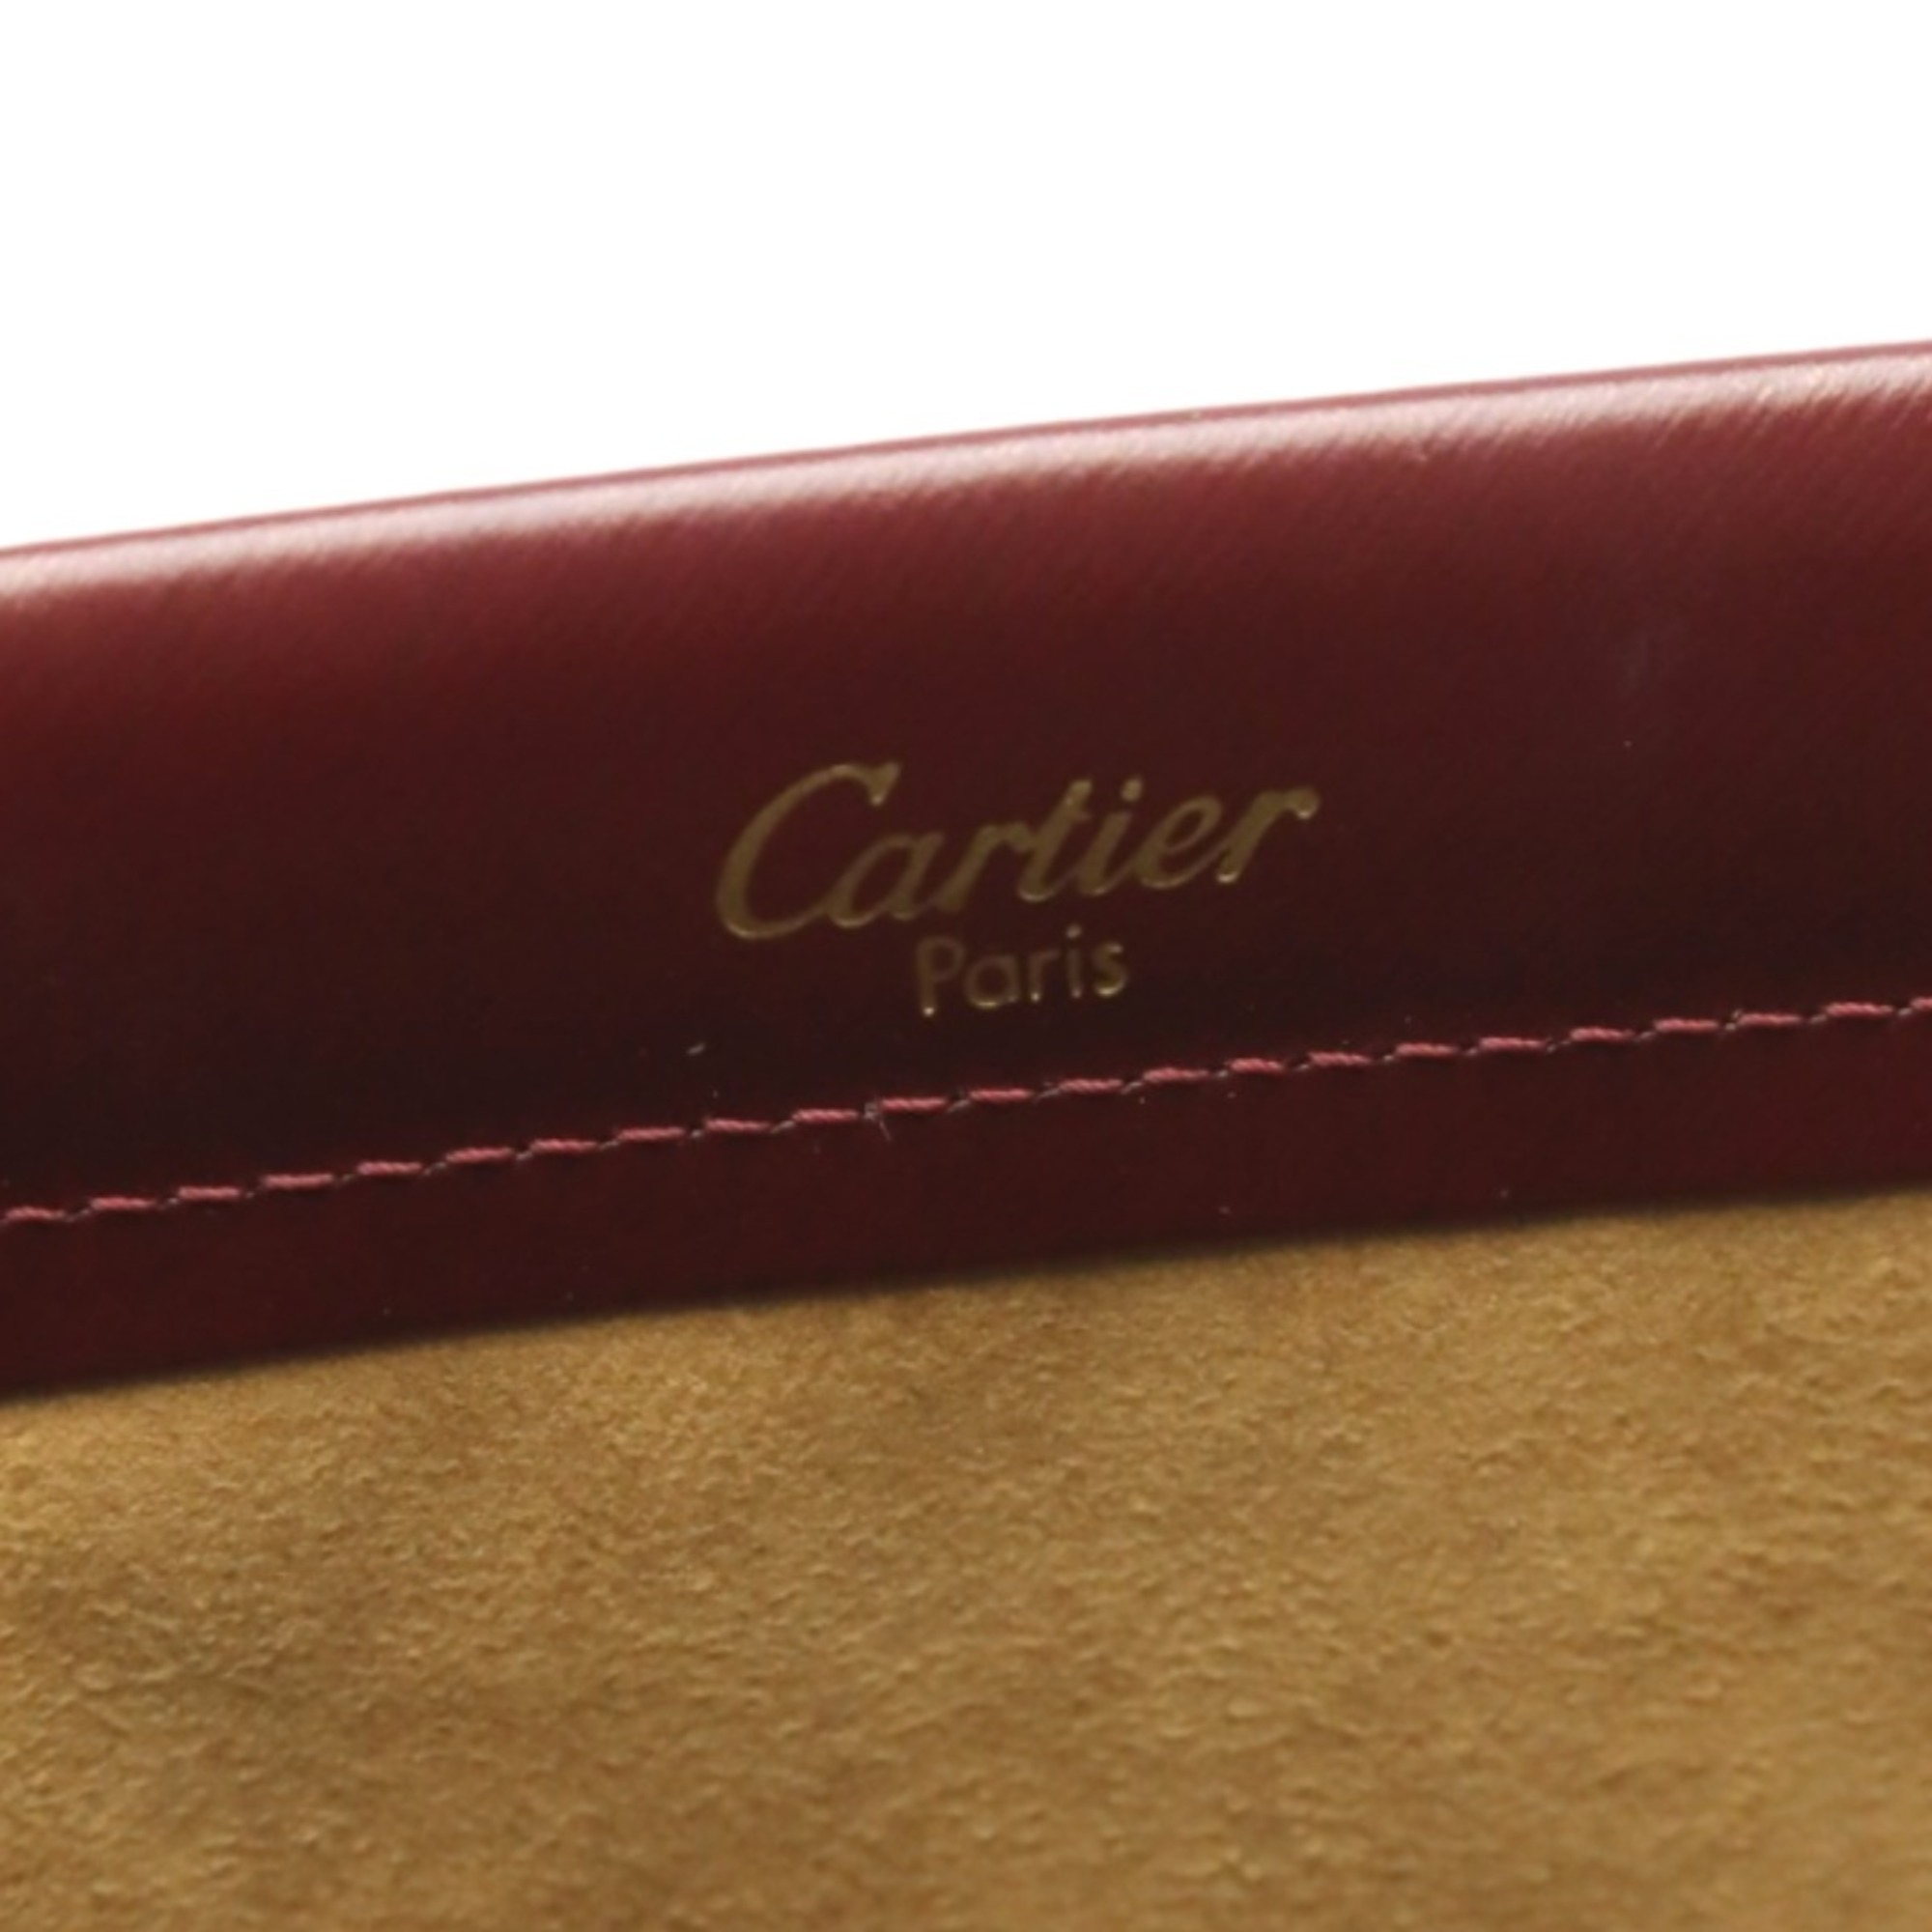 CARTIER Handbag Cartier Bordeaux